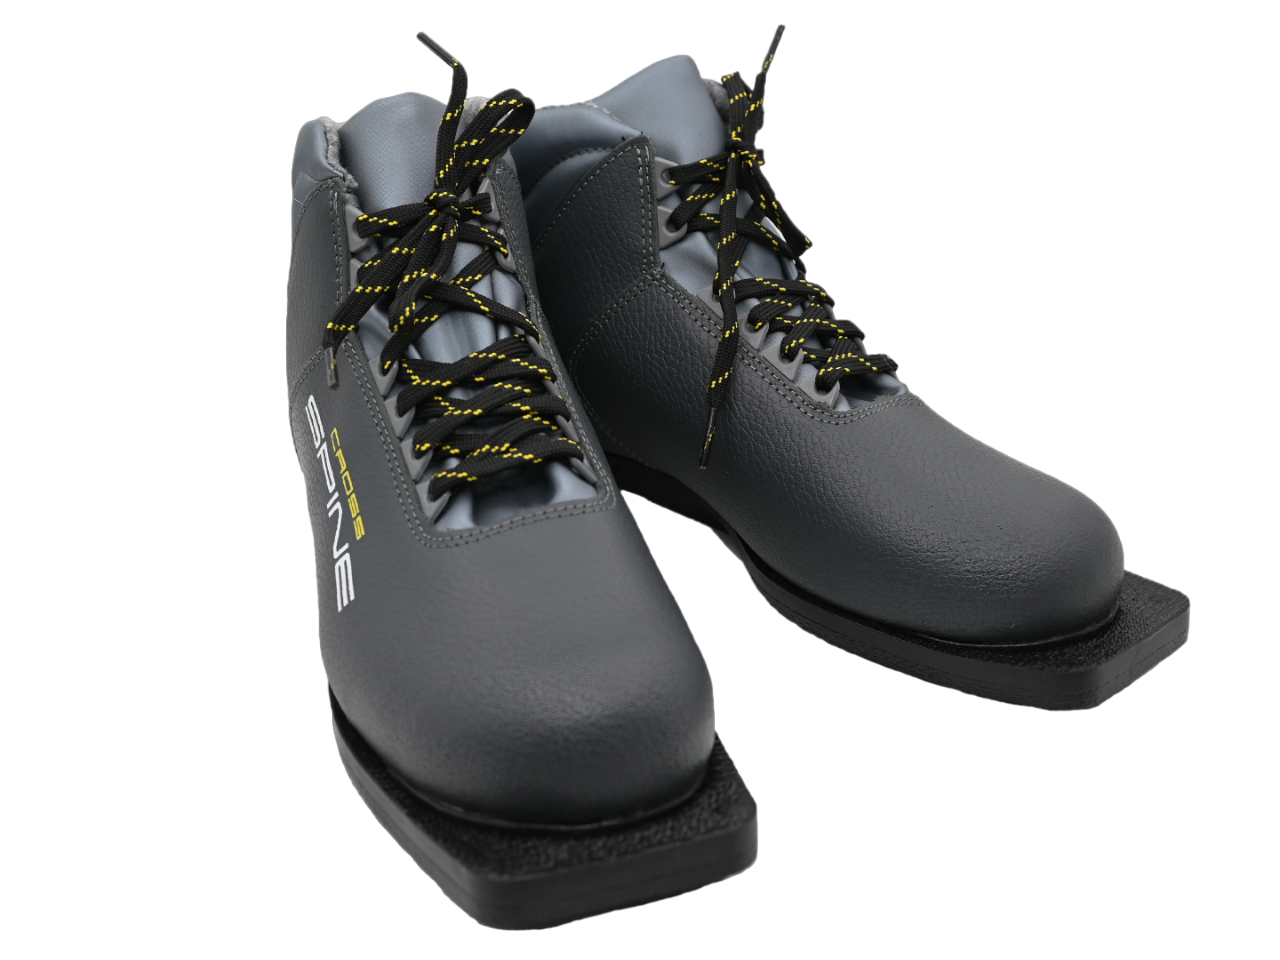 Лыжные ботинки SPINE 75 мм CROSS 35/7 кожаные размер 46